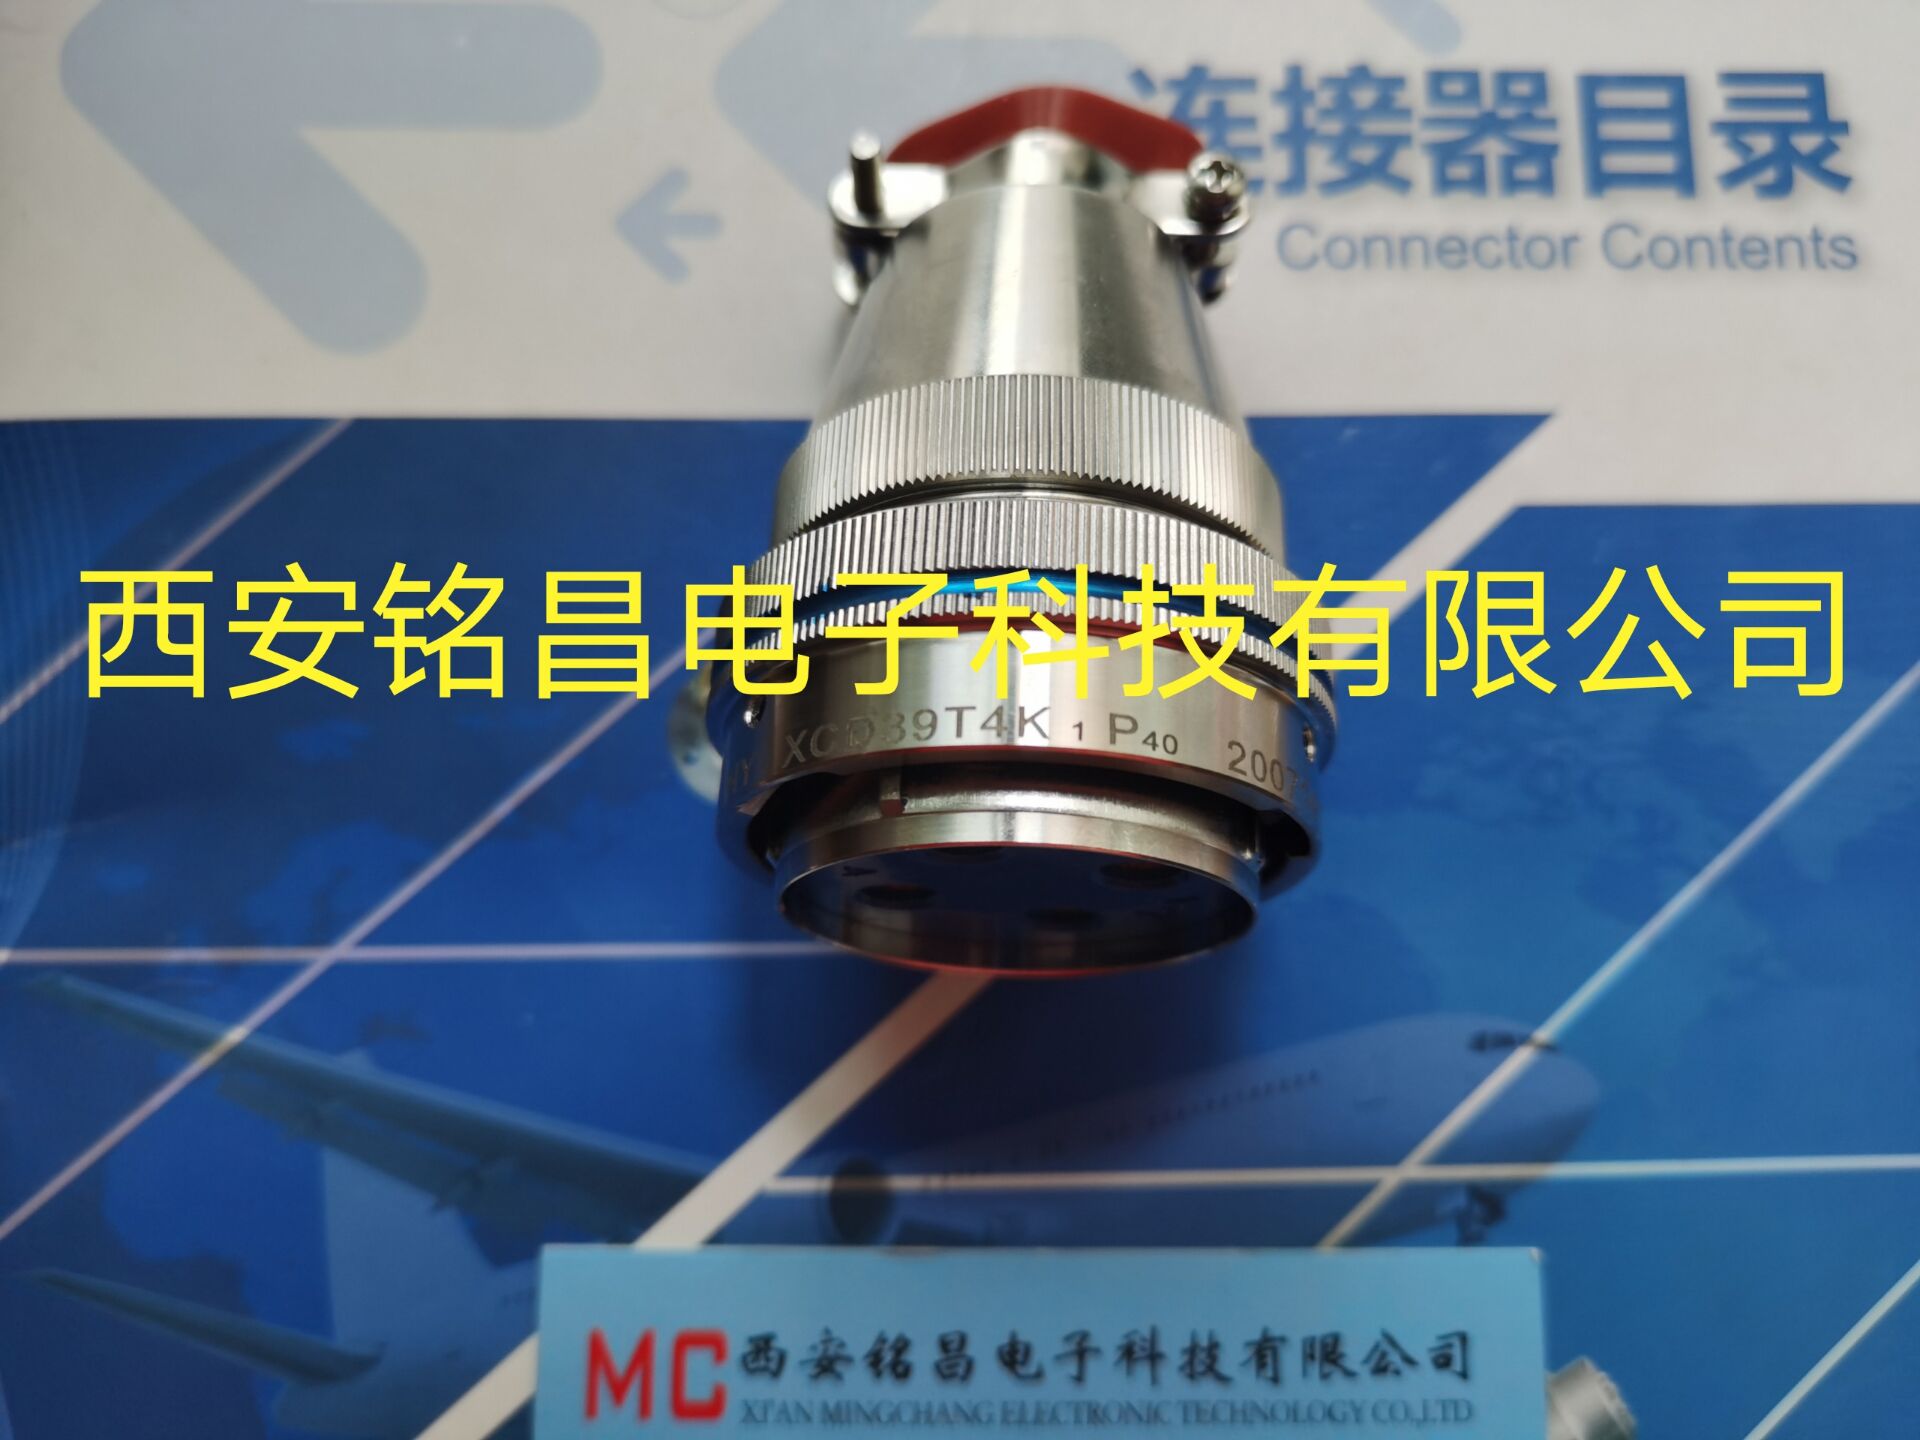 MCDZ西安铭昌销售XCD36F2Z1P1(W) 圆形连接器-厂家直销